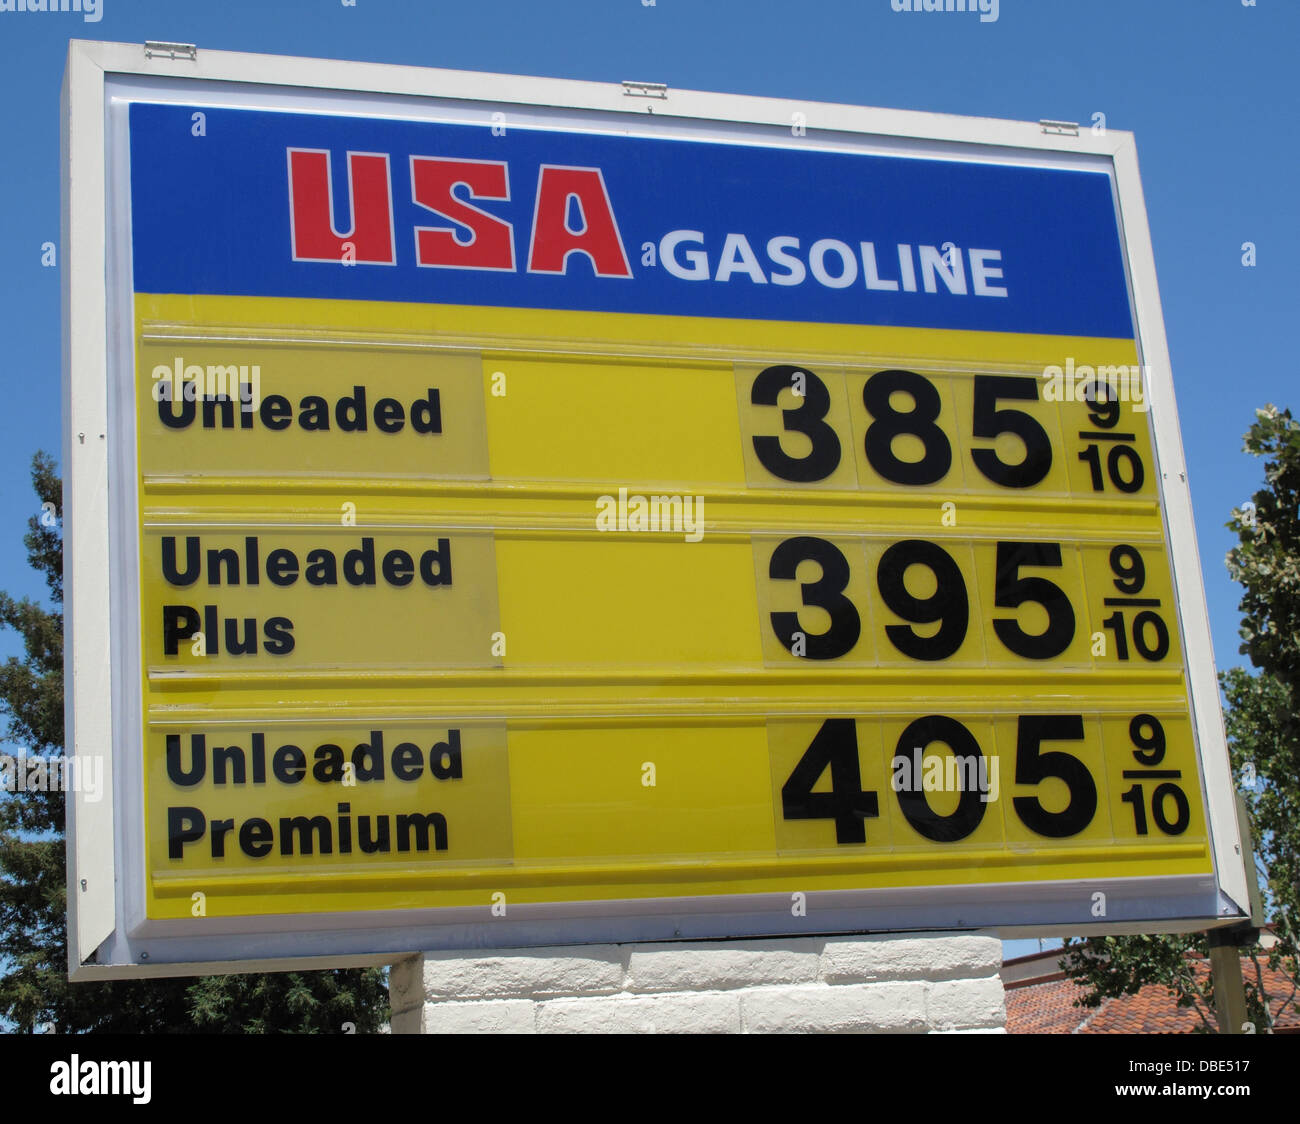 USA Gasoline station price sign in San Jose, California Stock Photo